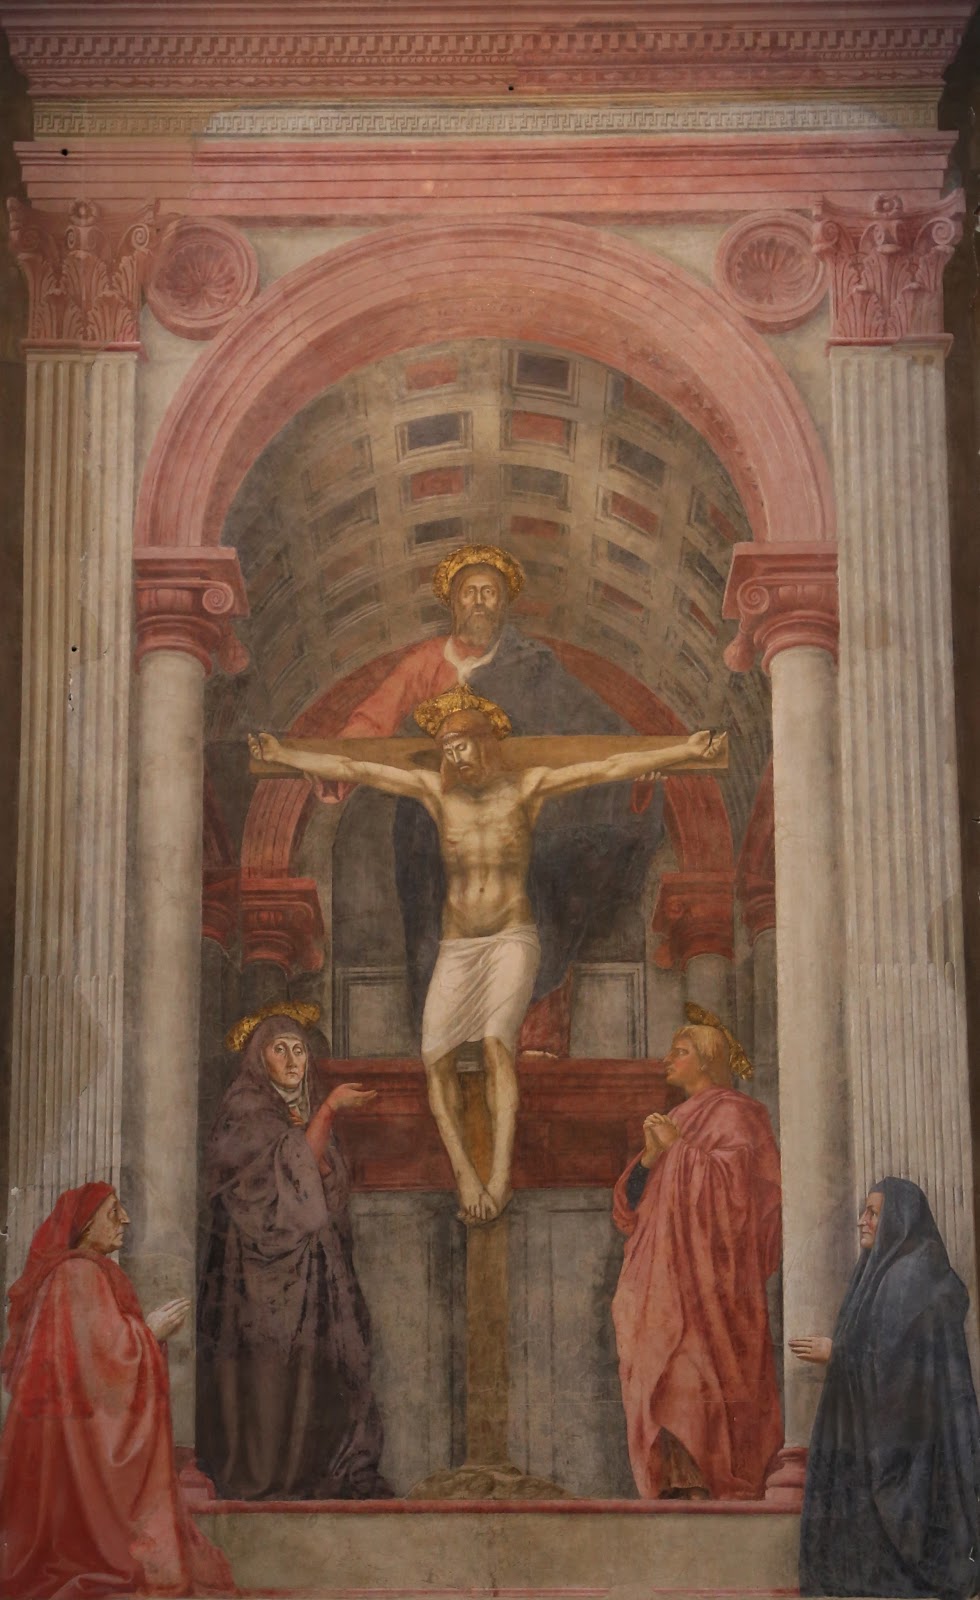 Masaccio-1401-1428 (19).jpg